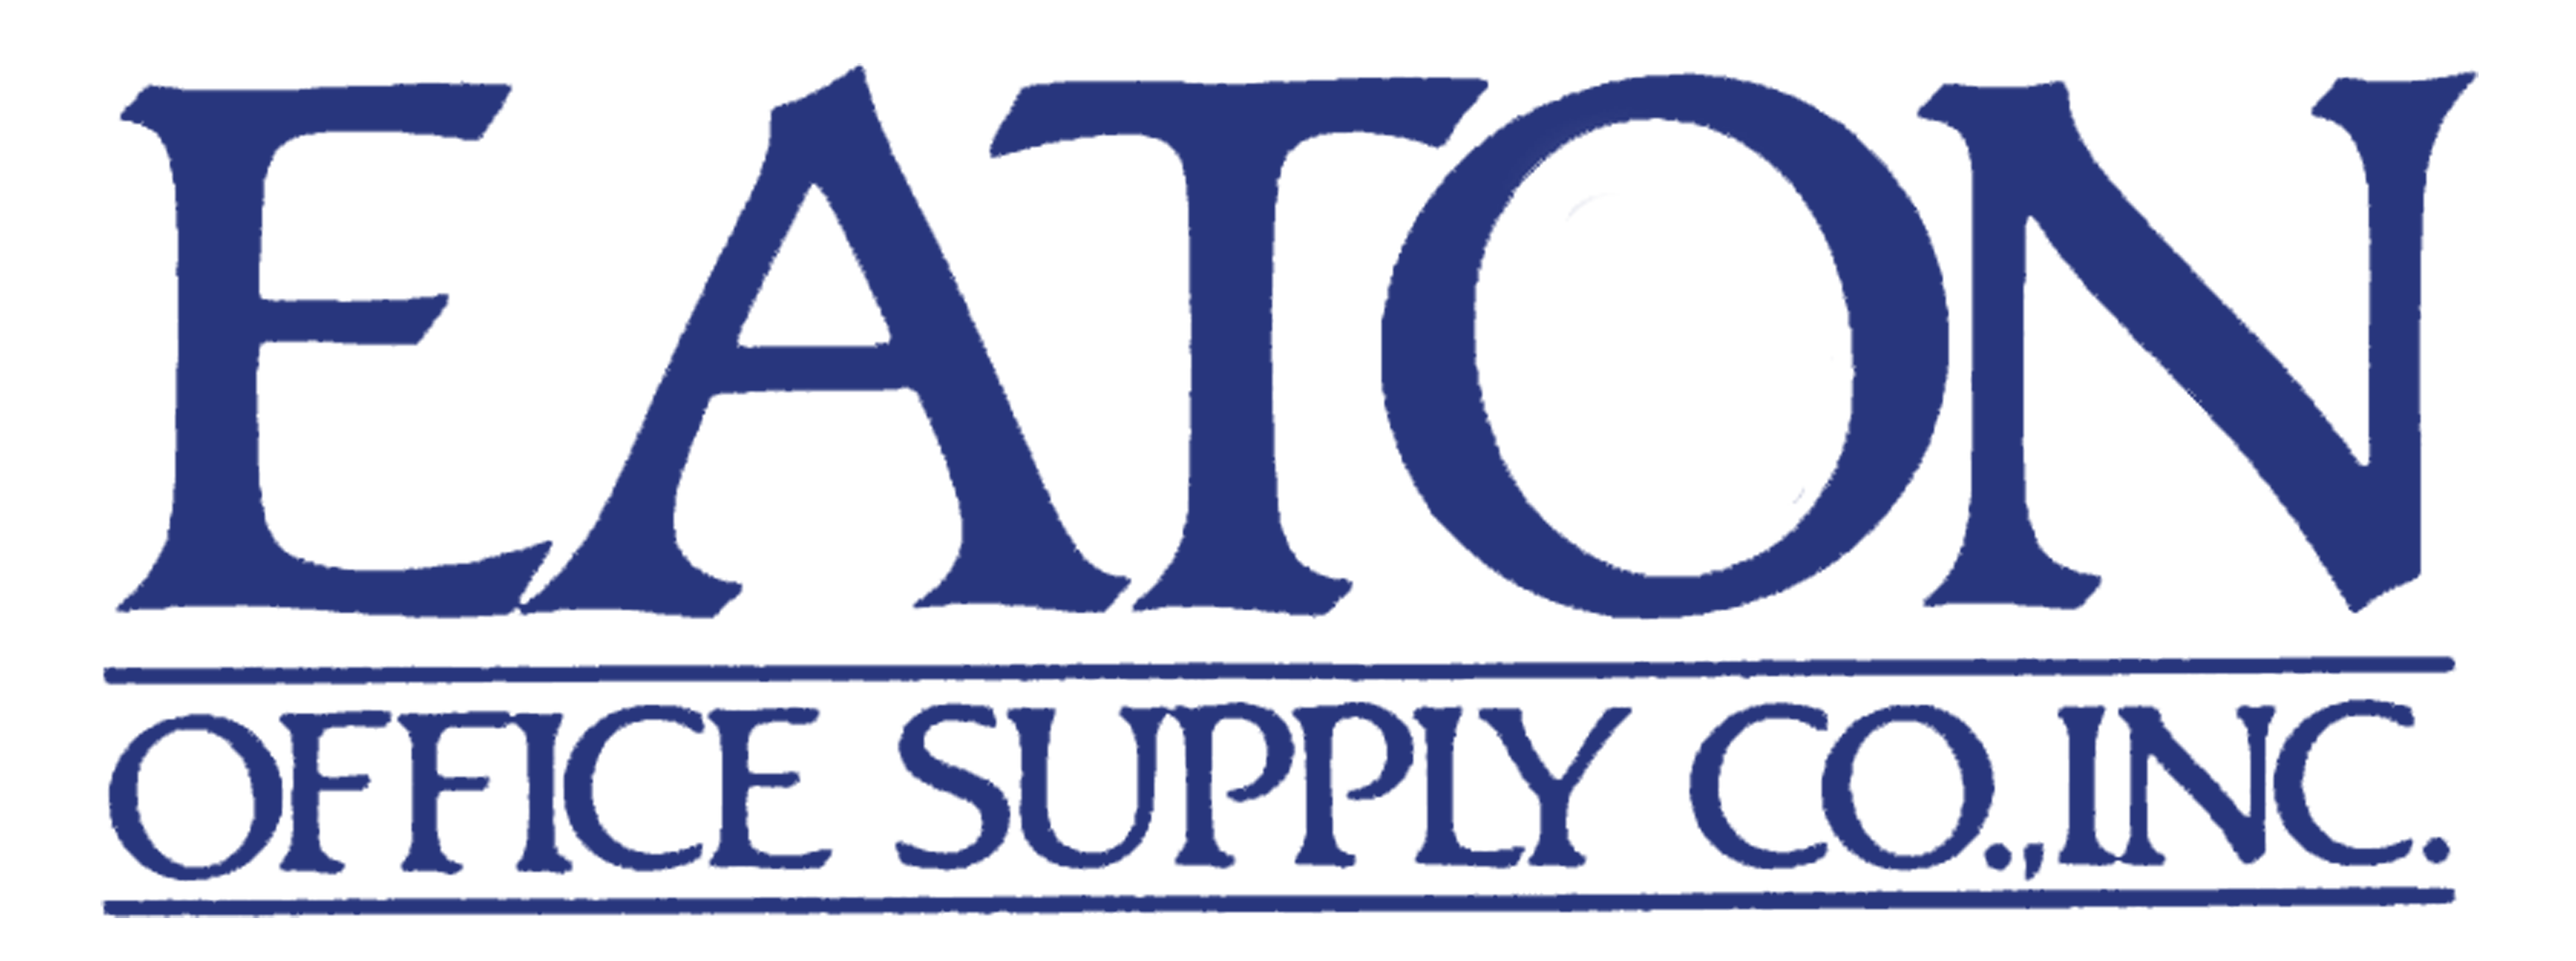 Eaton Logo - Eaton logo Community Services for Every1